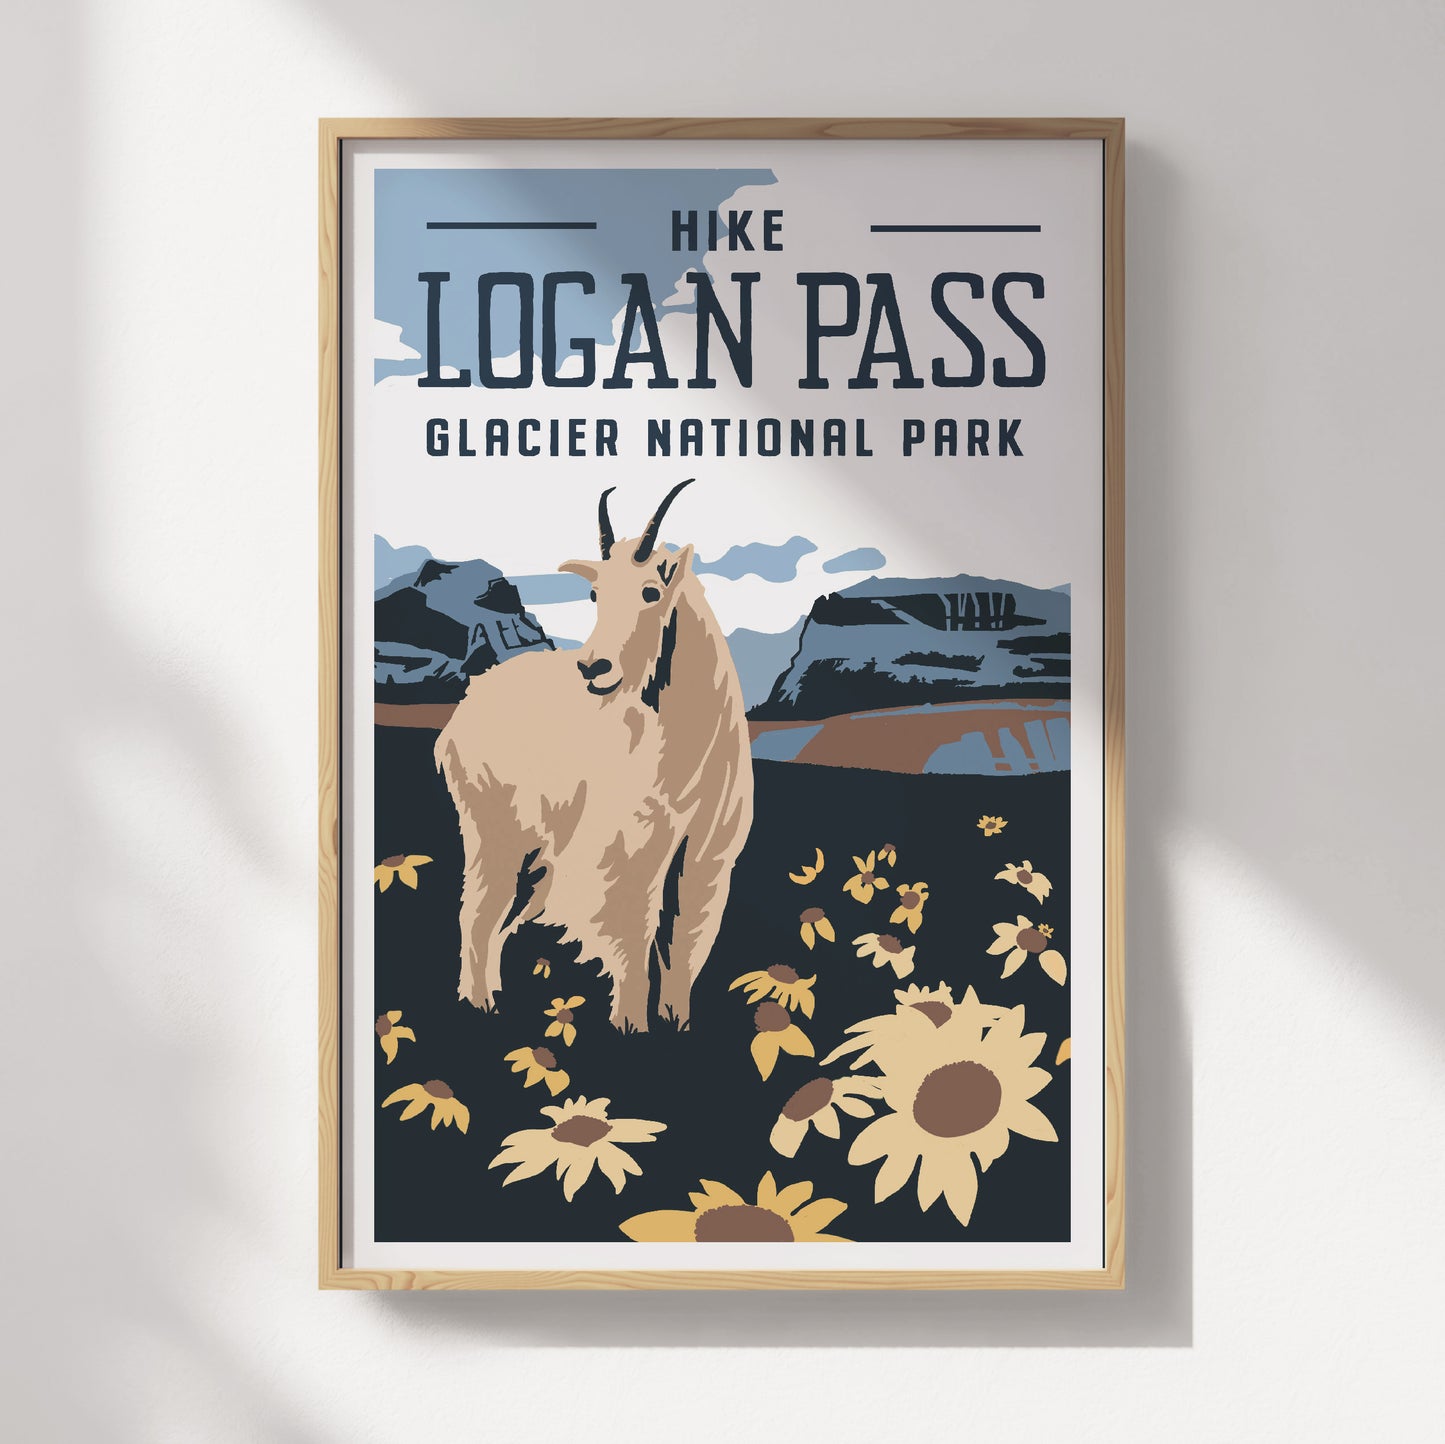 Logan Pass Travel Poster